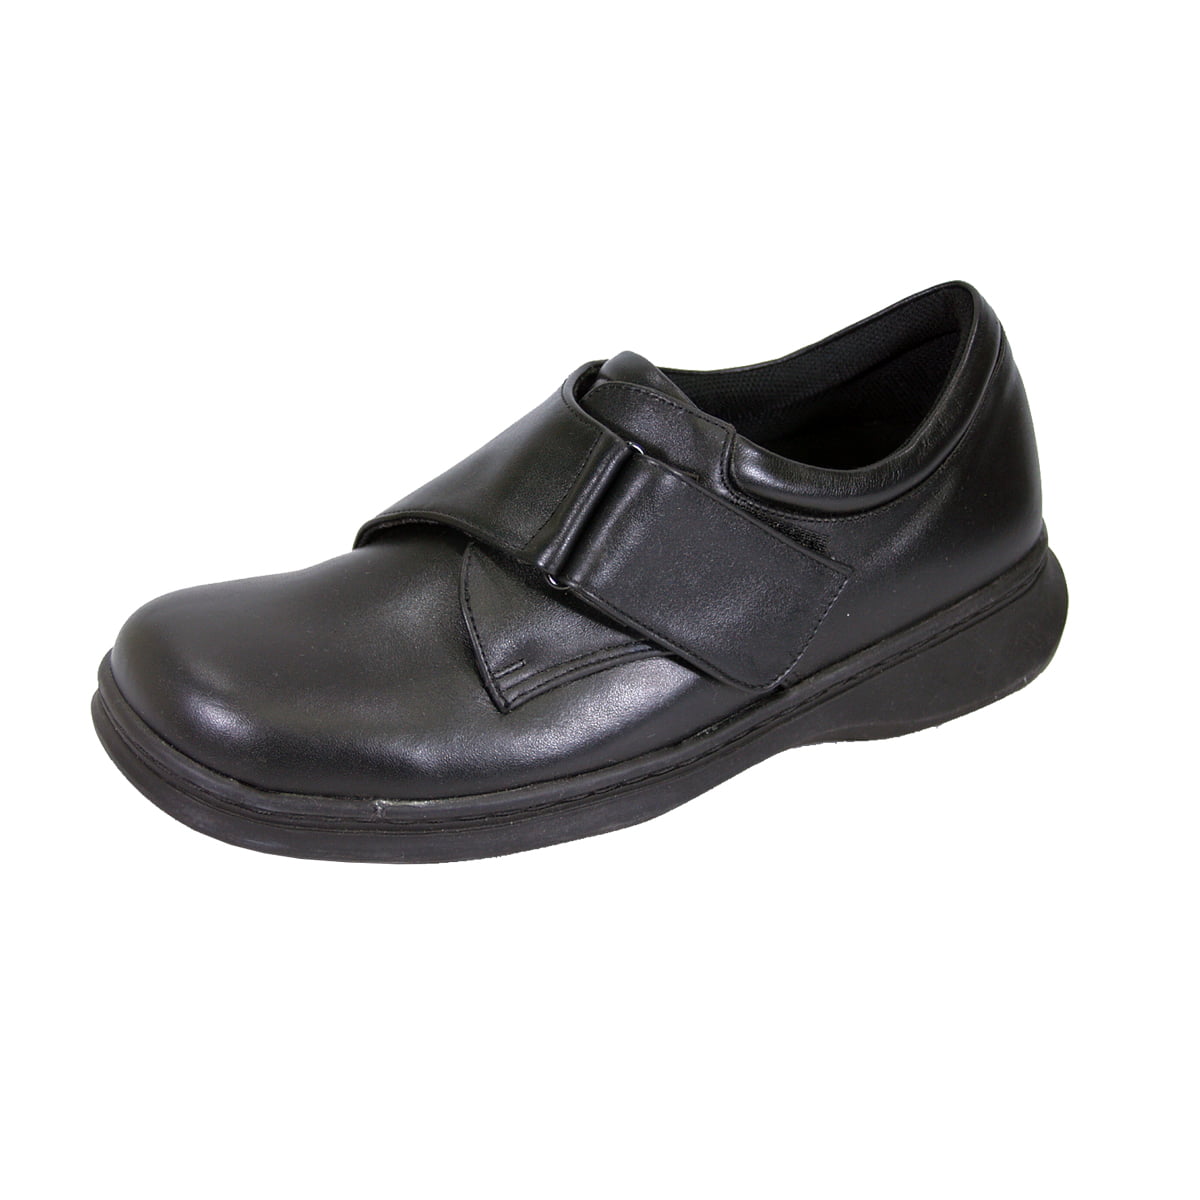 Size/Measurement Guide 24 Hour Comfort  Mike Men Wide Width Leather Step-in Sleek Casual Shoes FootwearUS